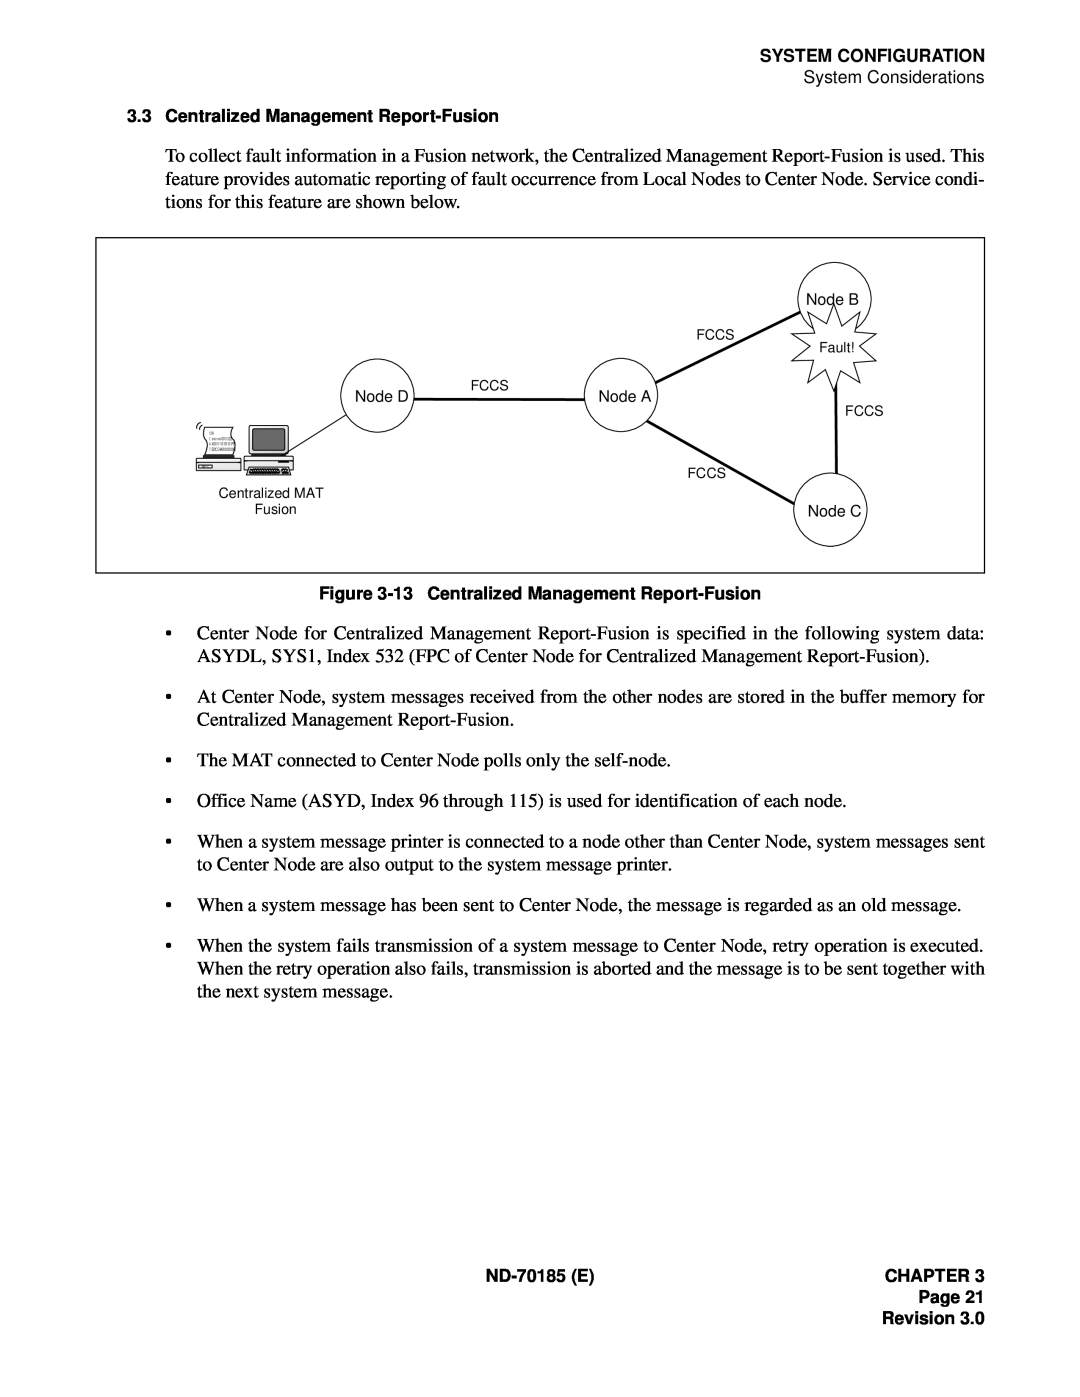 NEC NEAX2400 System Configuration, 3.3Centralized Management Report-Fusion, 13Centralized Management Report-Fusion, Node B 